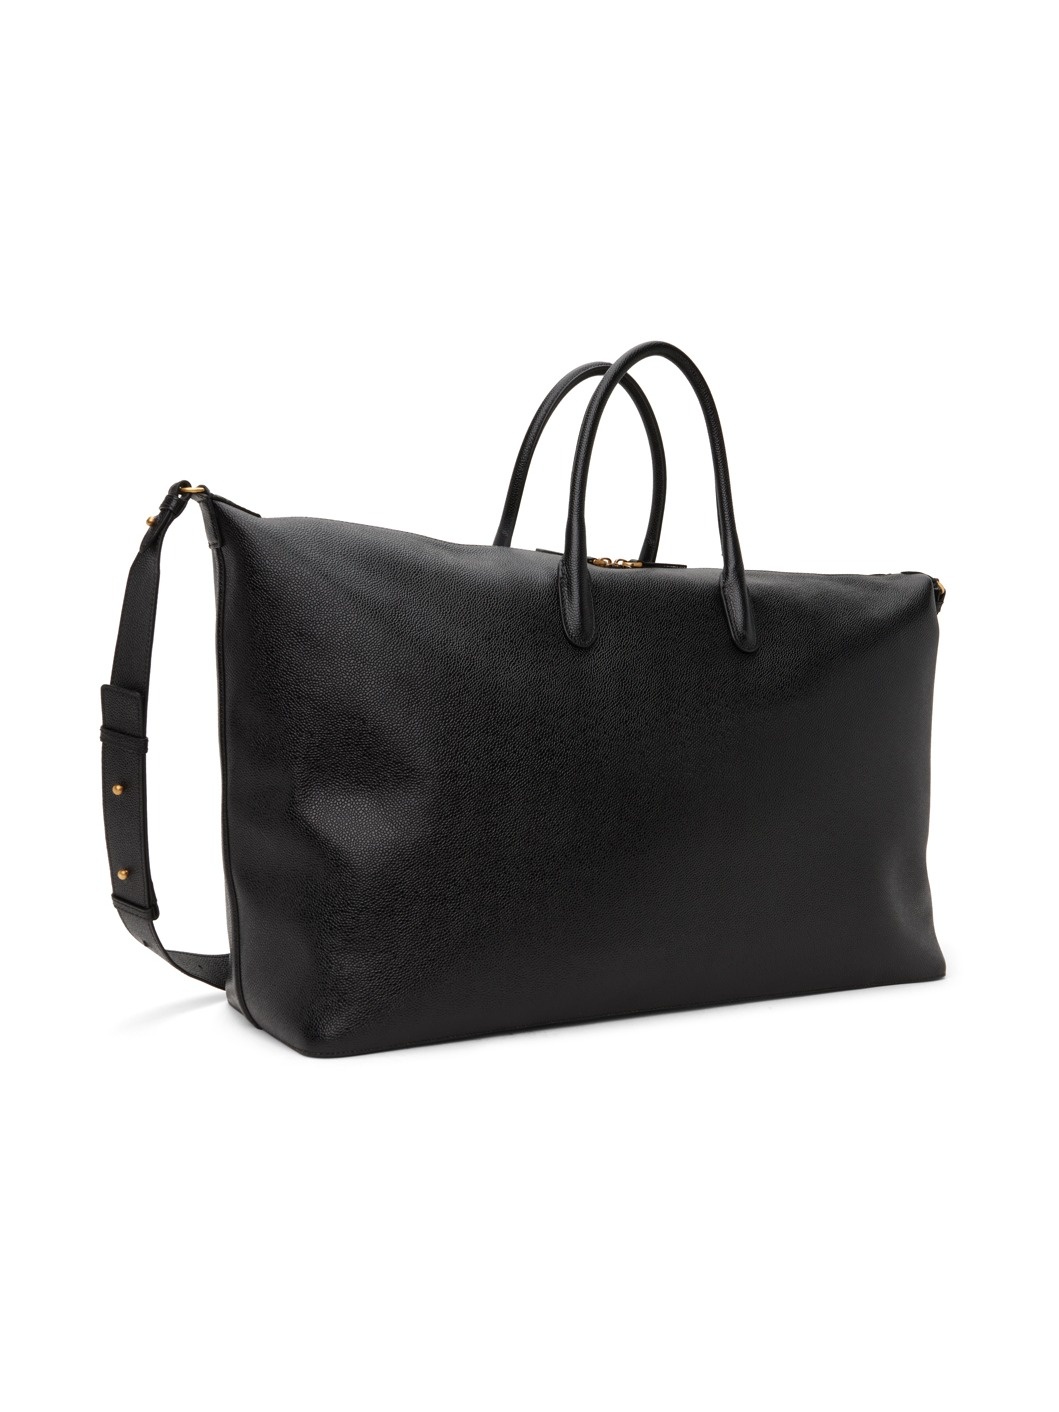 Black Pebble Grain Leather Soft Duffle Bag - 3